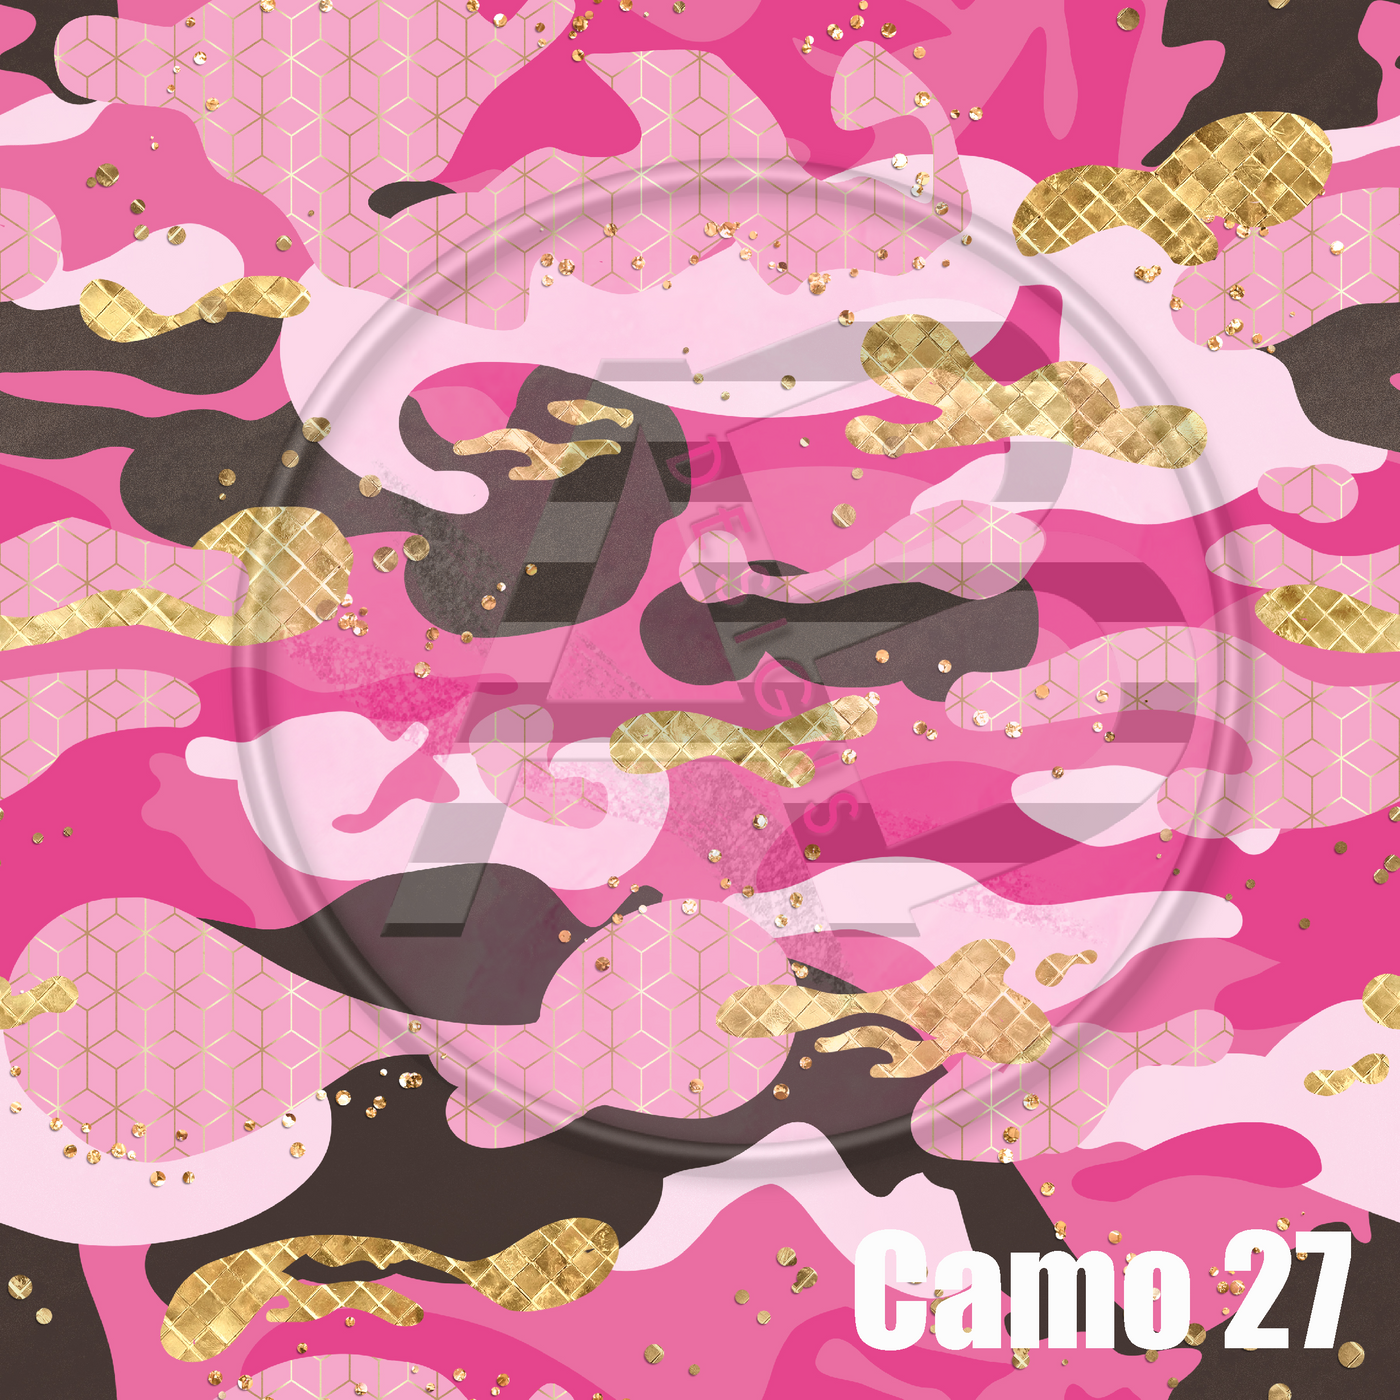 Adhesive Patterned Vinyl - Camo 27